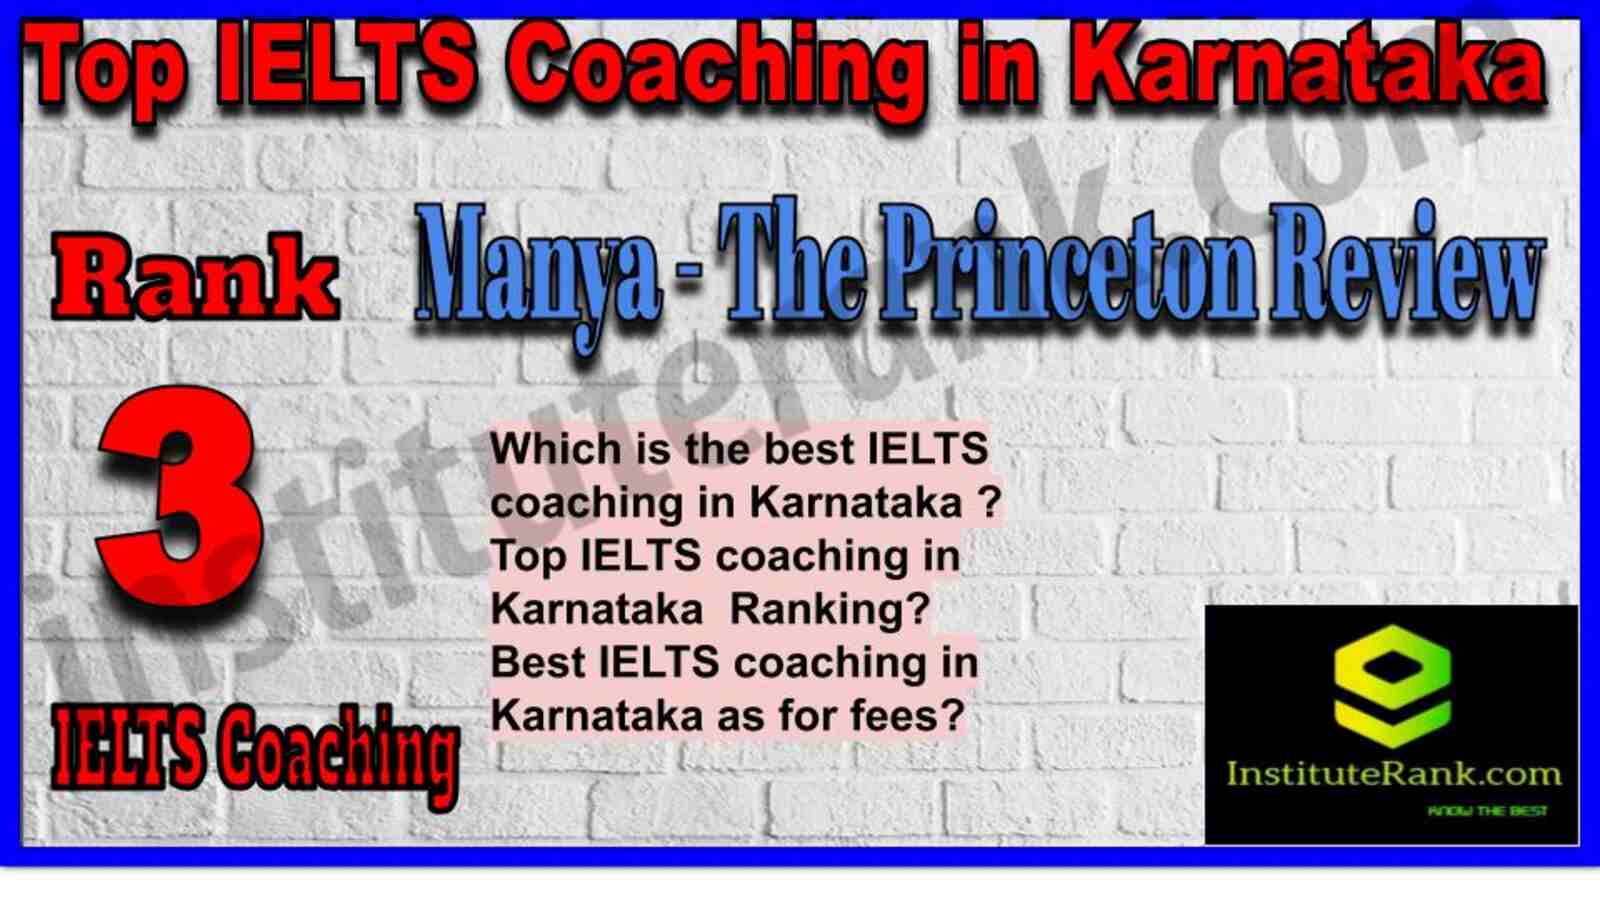 Rank 3. Manya - The Princeton Review | Best IELTS Coaching in Karnataka